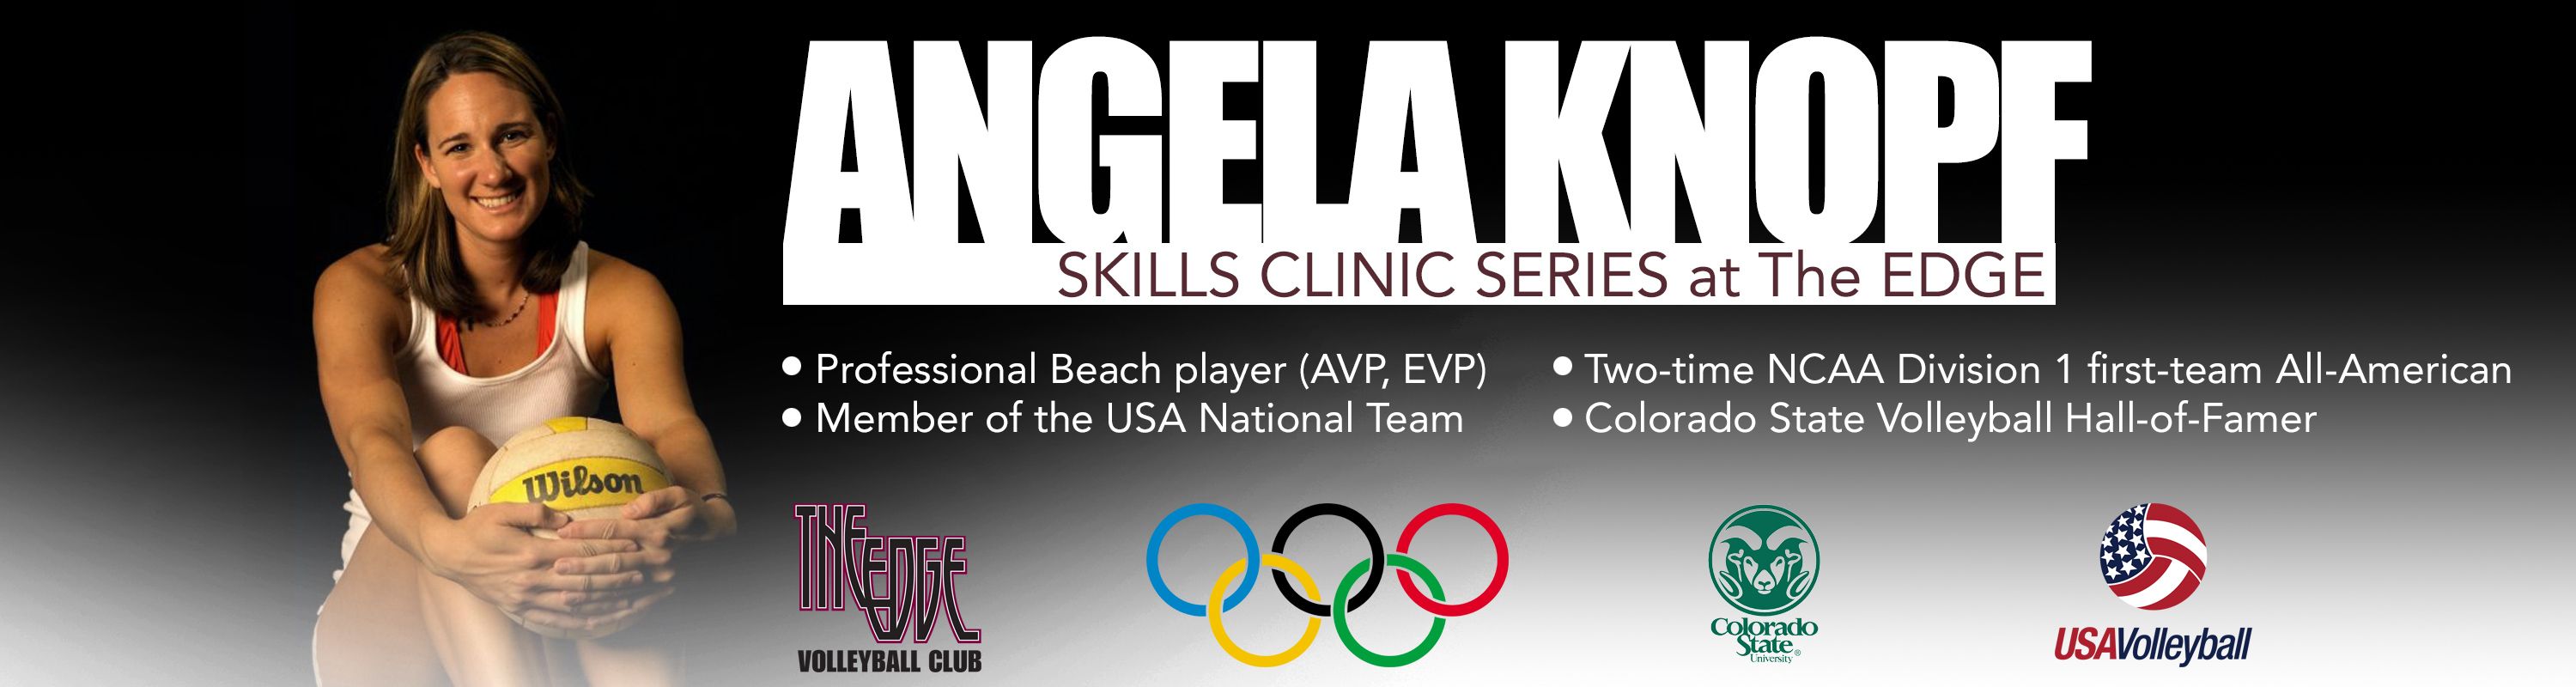 Angela Knopf Denver Area Volleyball Skills Clinics